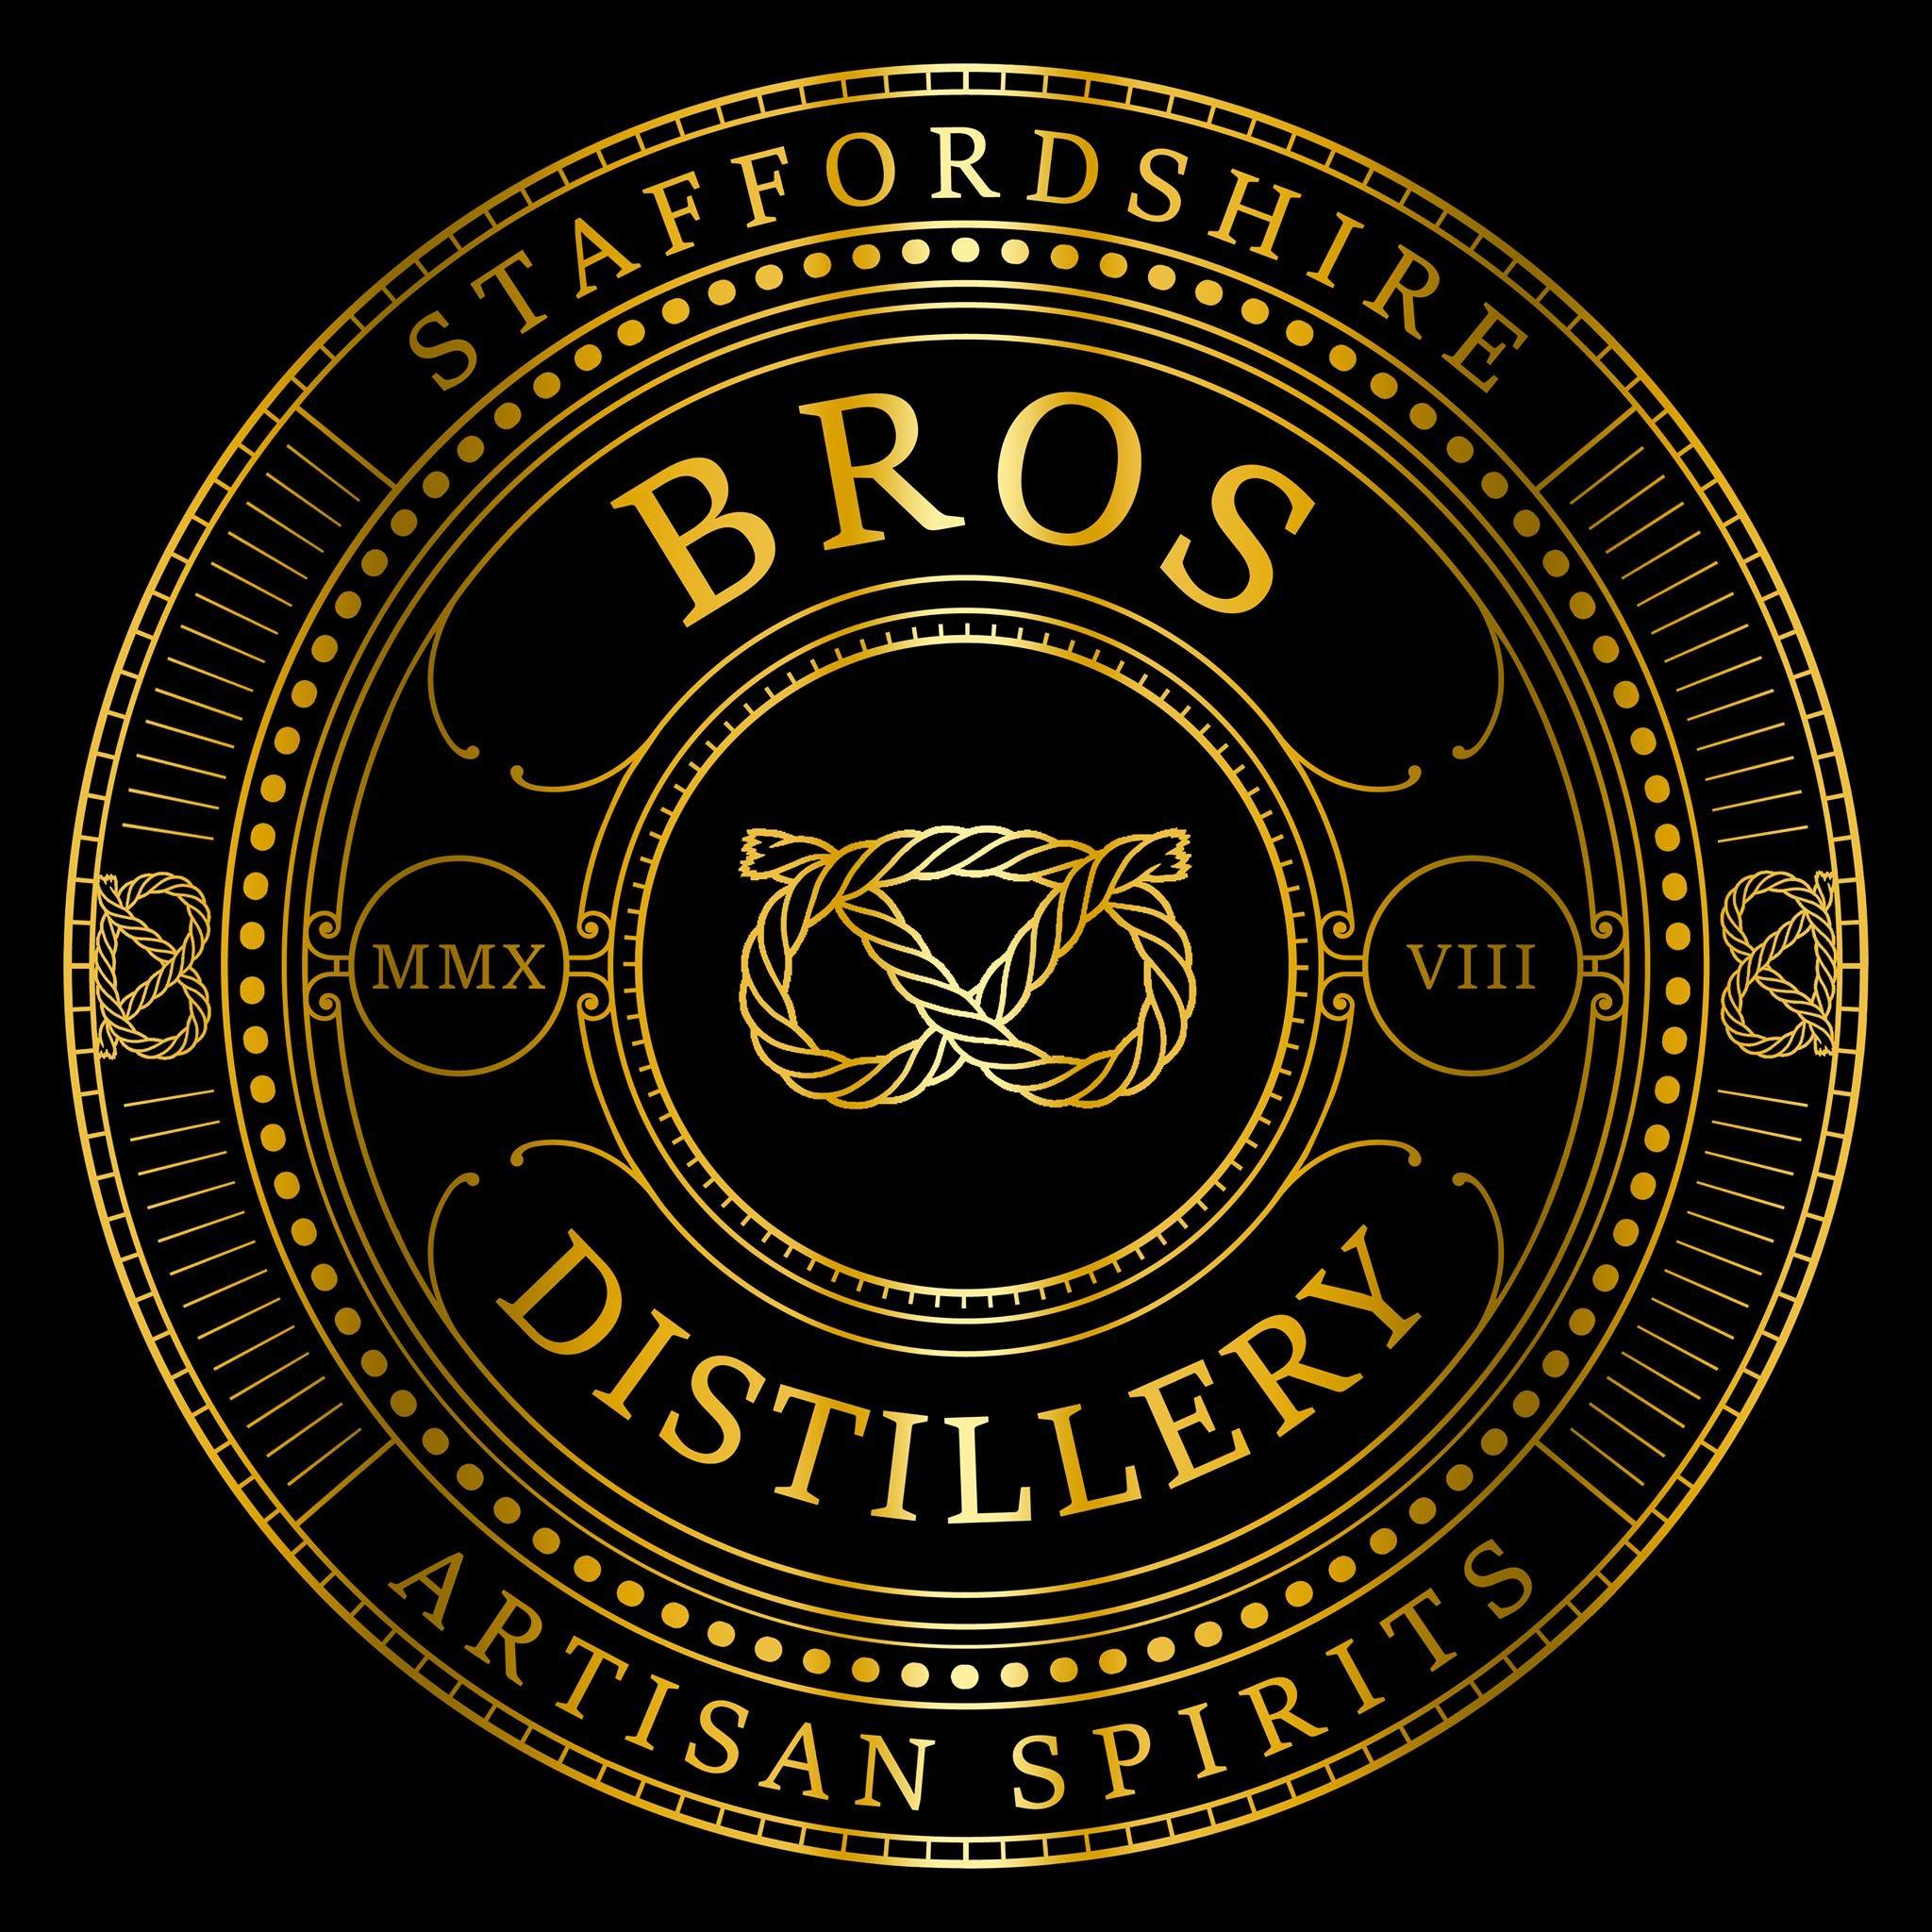 Bros Distillery brand logo